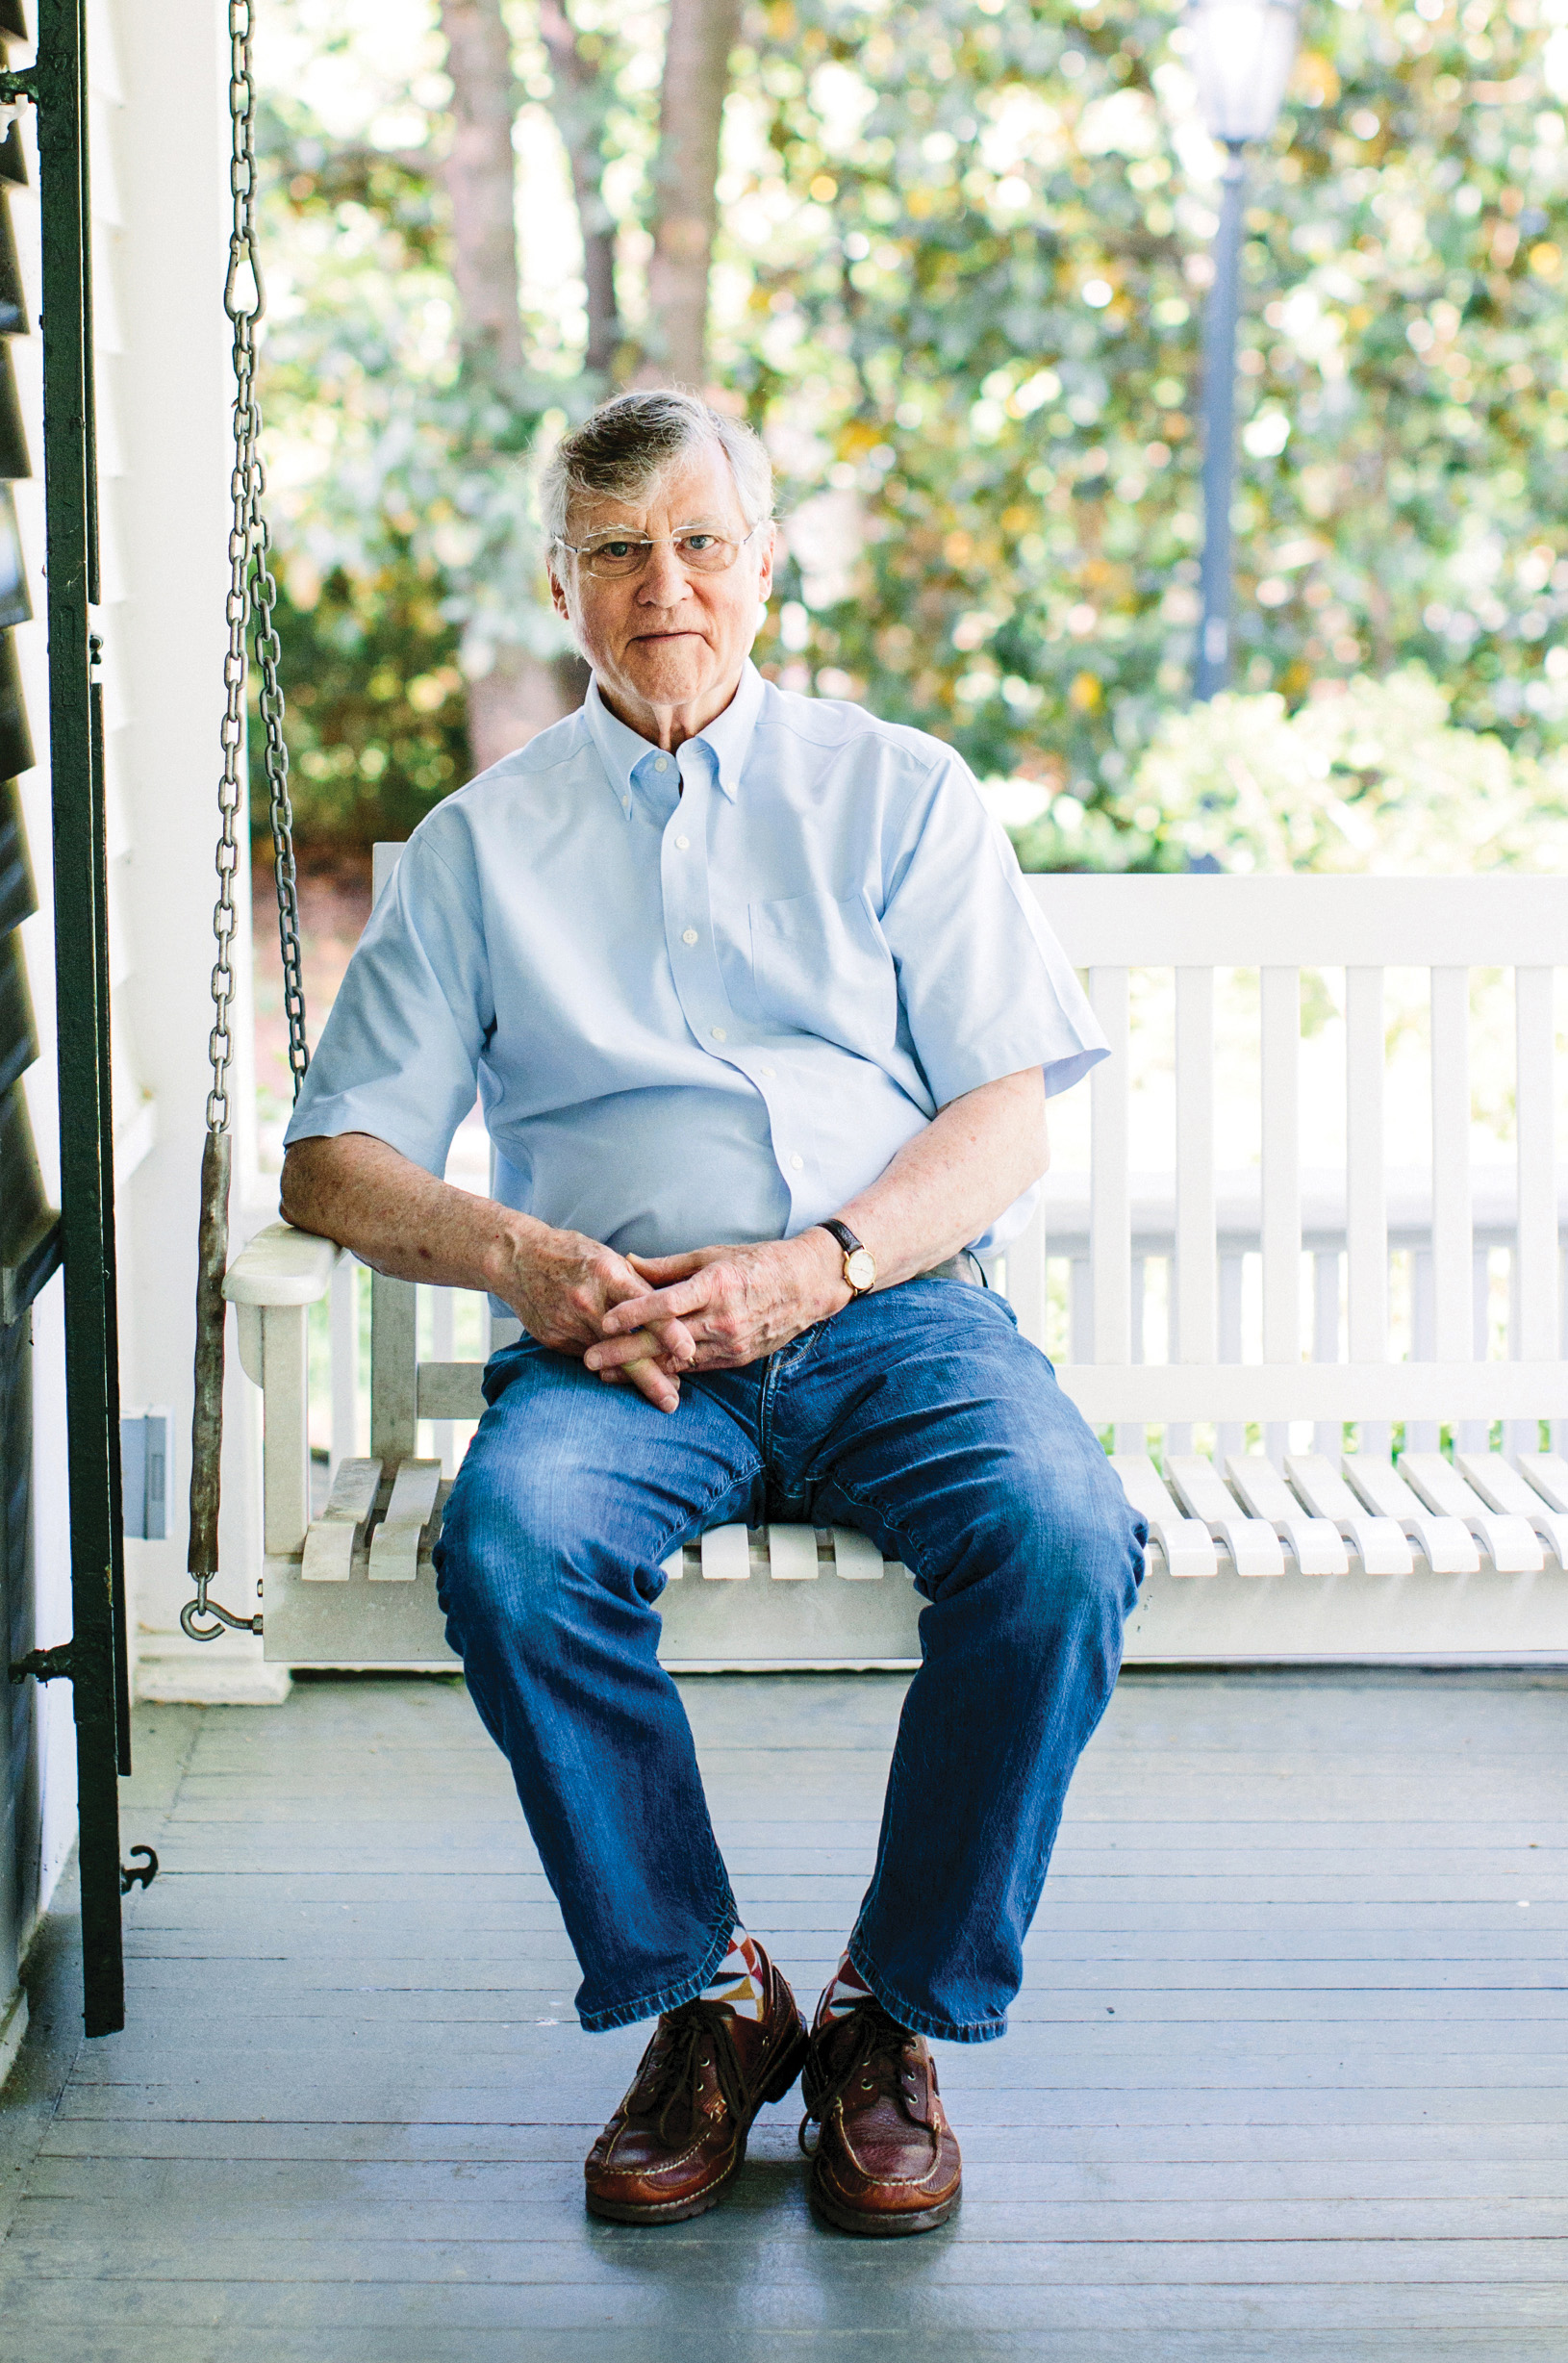 Bill Ferris on porch swing